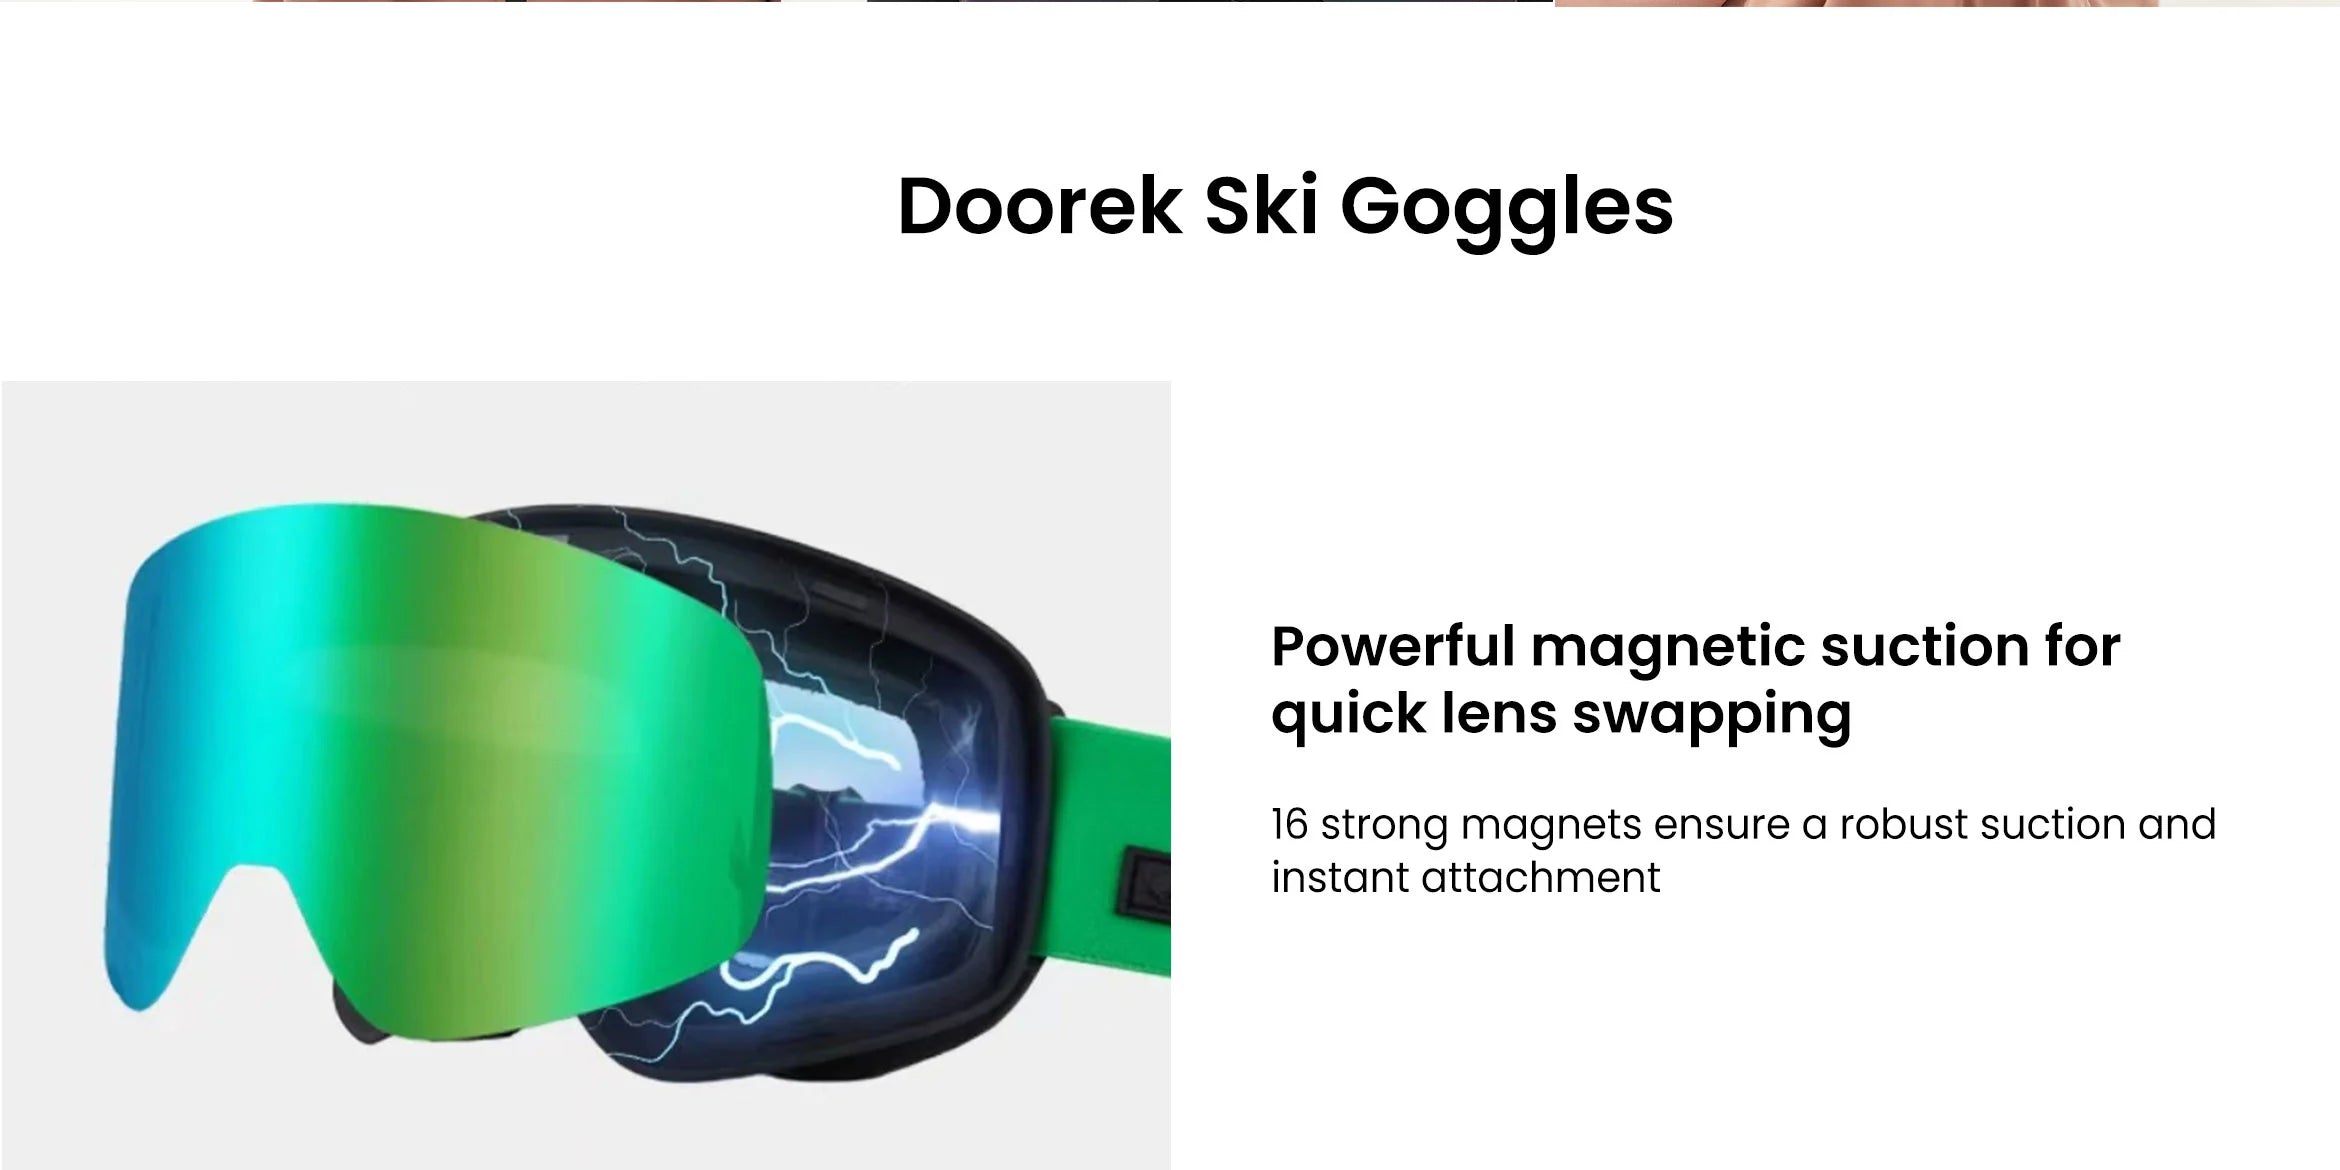 2. Doorek ski goggles - magnets